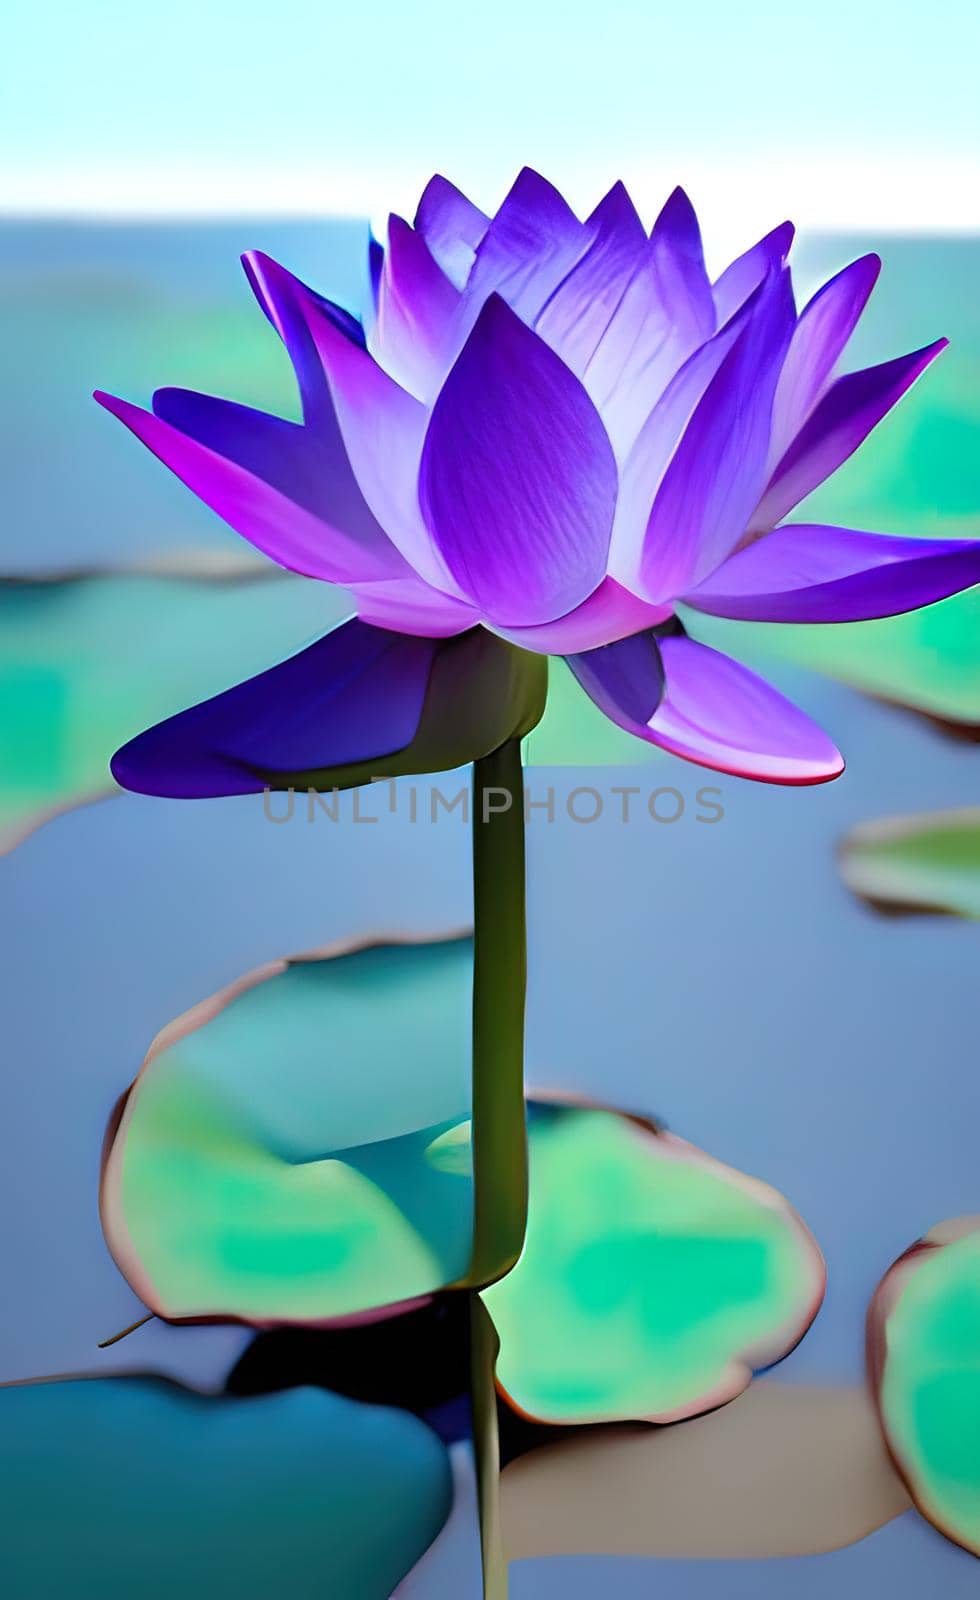 lotus flower in the pond by yilmazsavaskandag